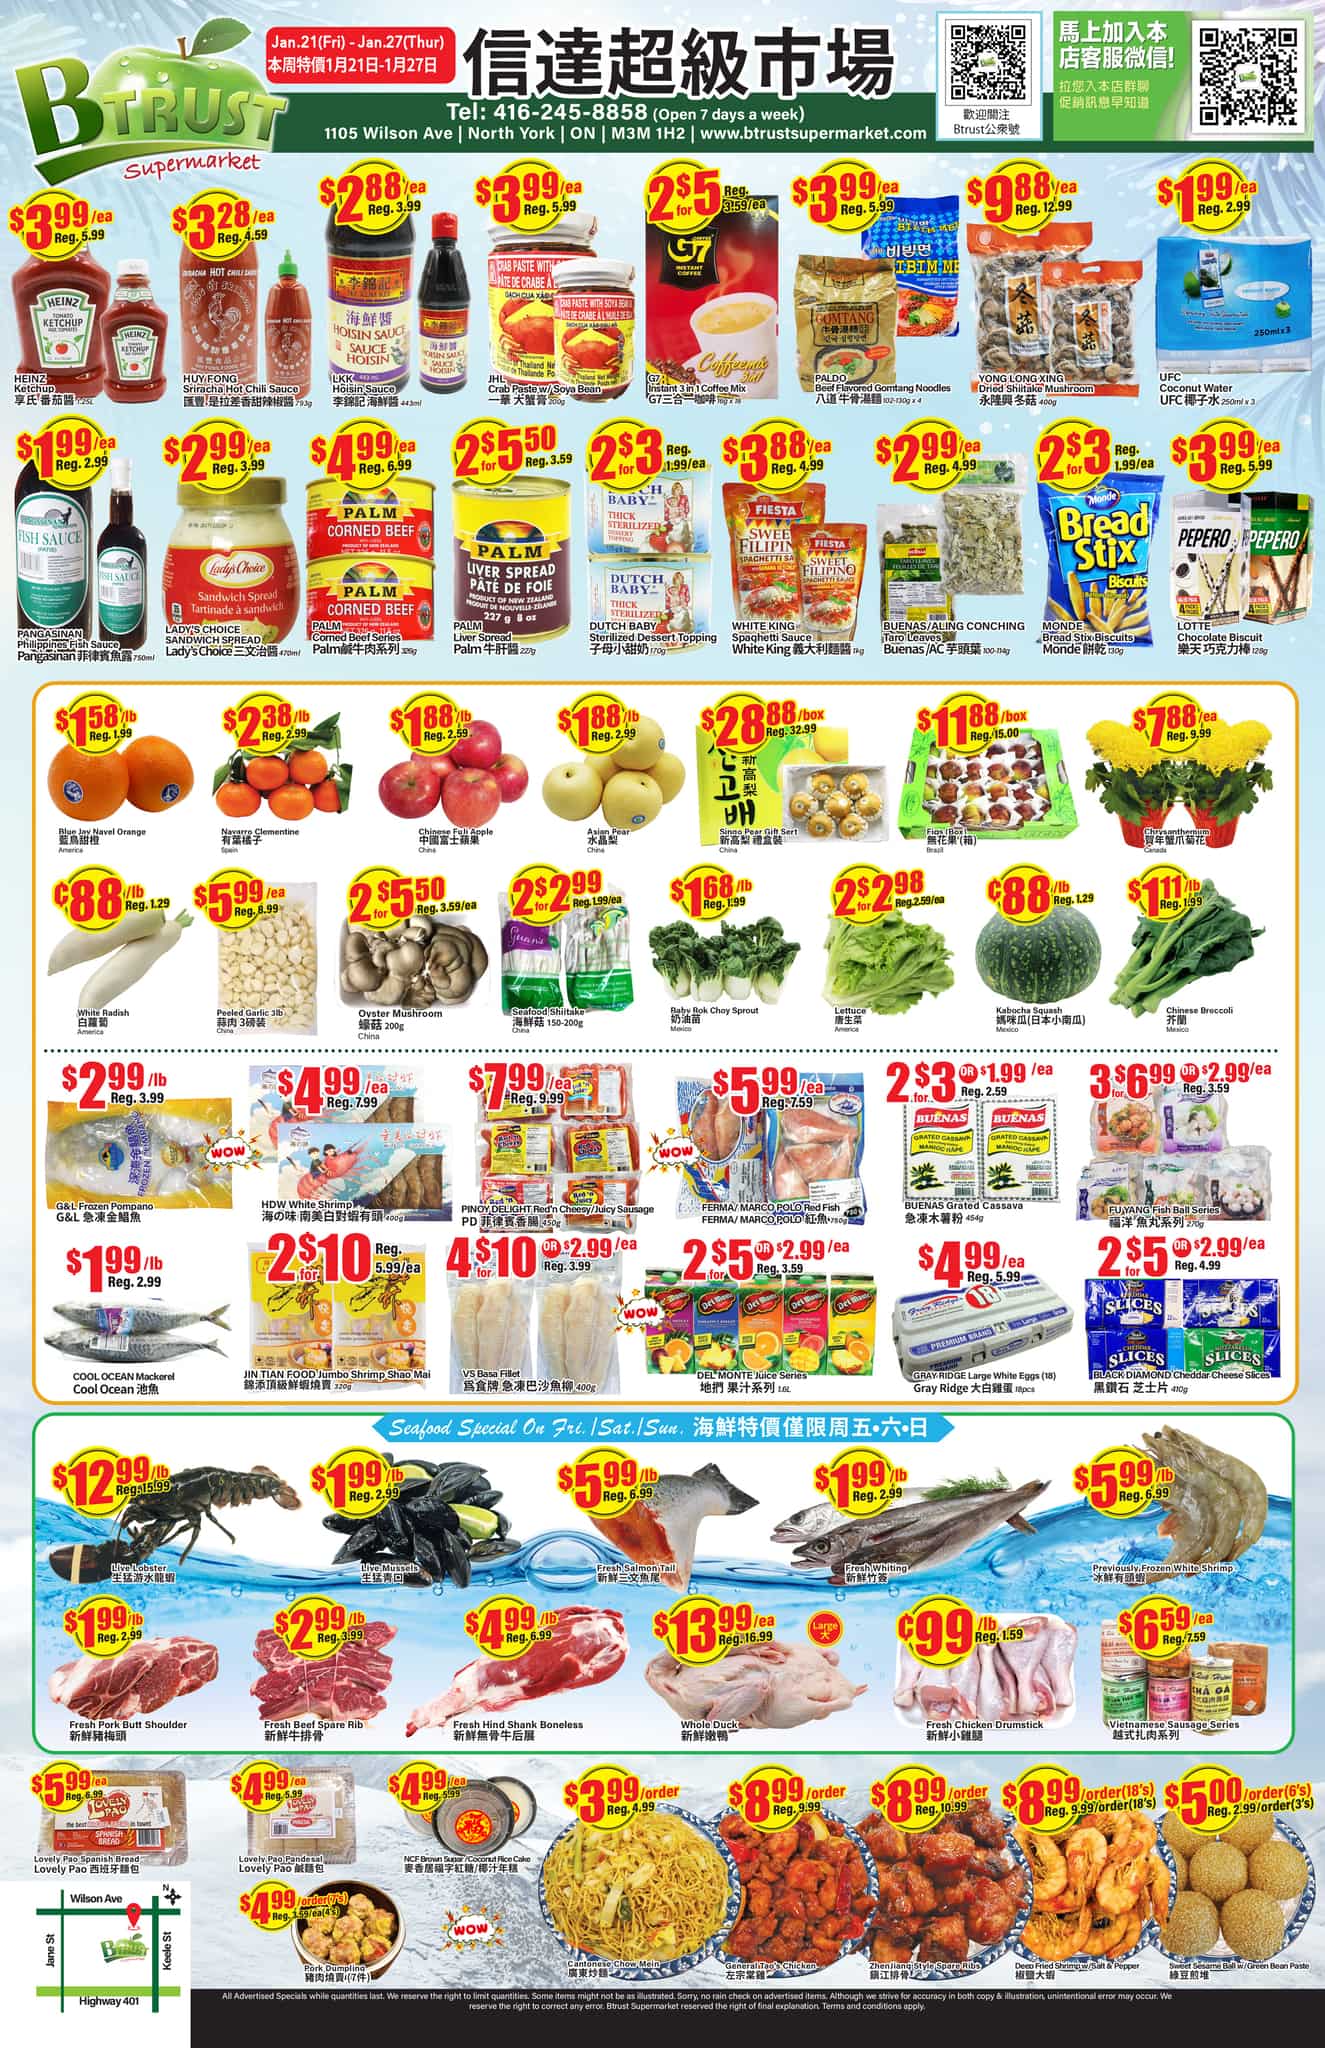 BTrust supermarket - Weekly Flyer Specials